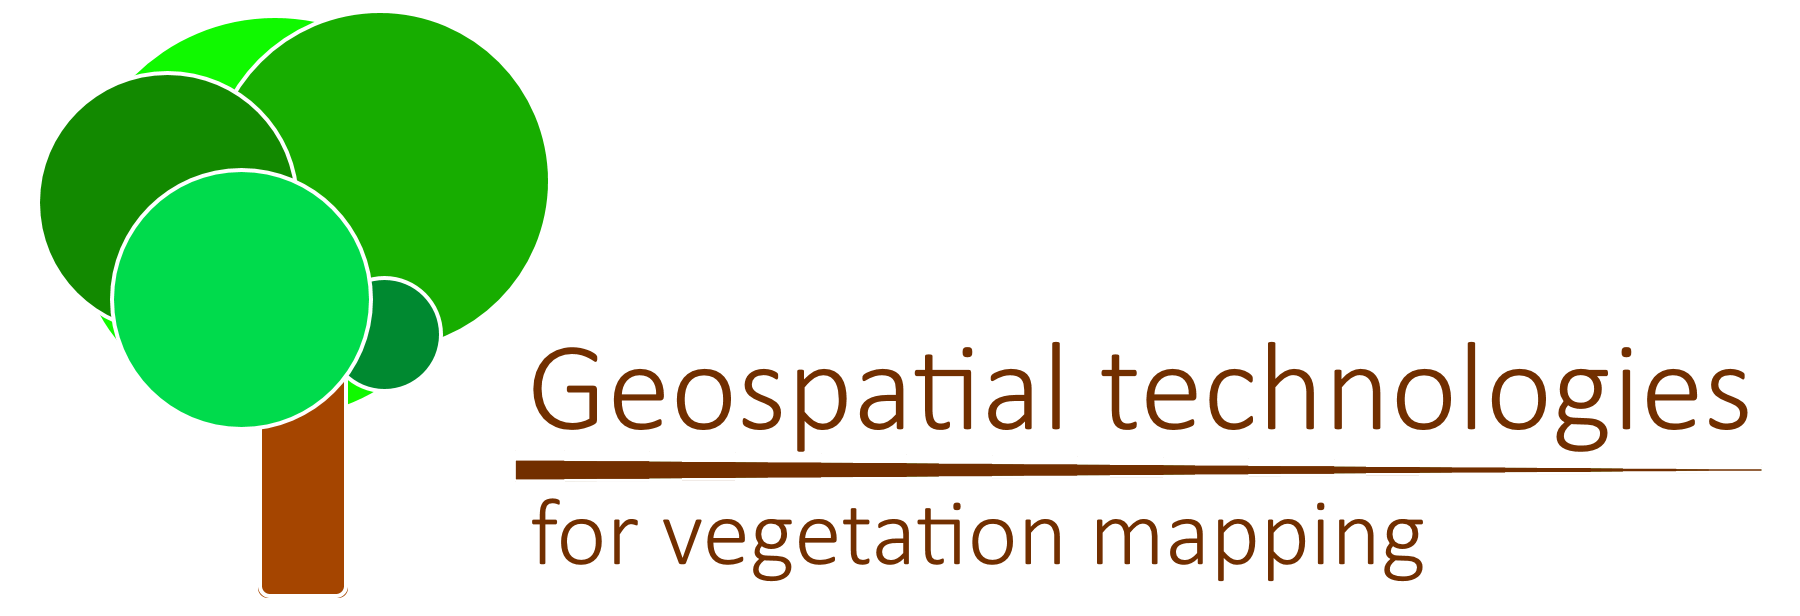 vegetation website